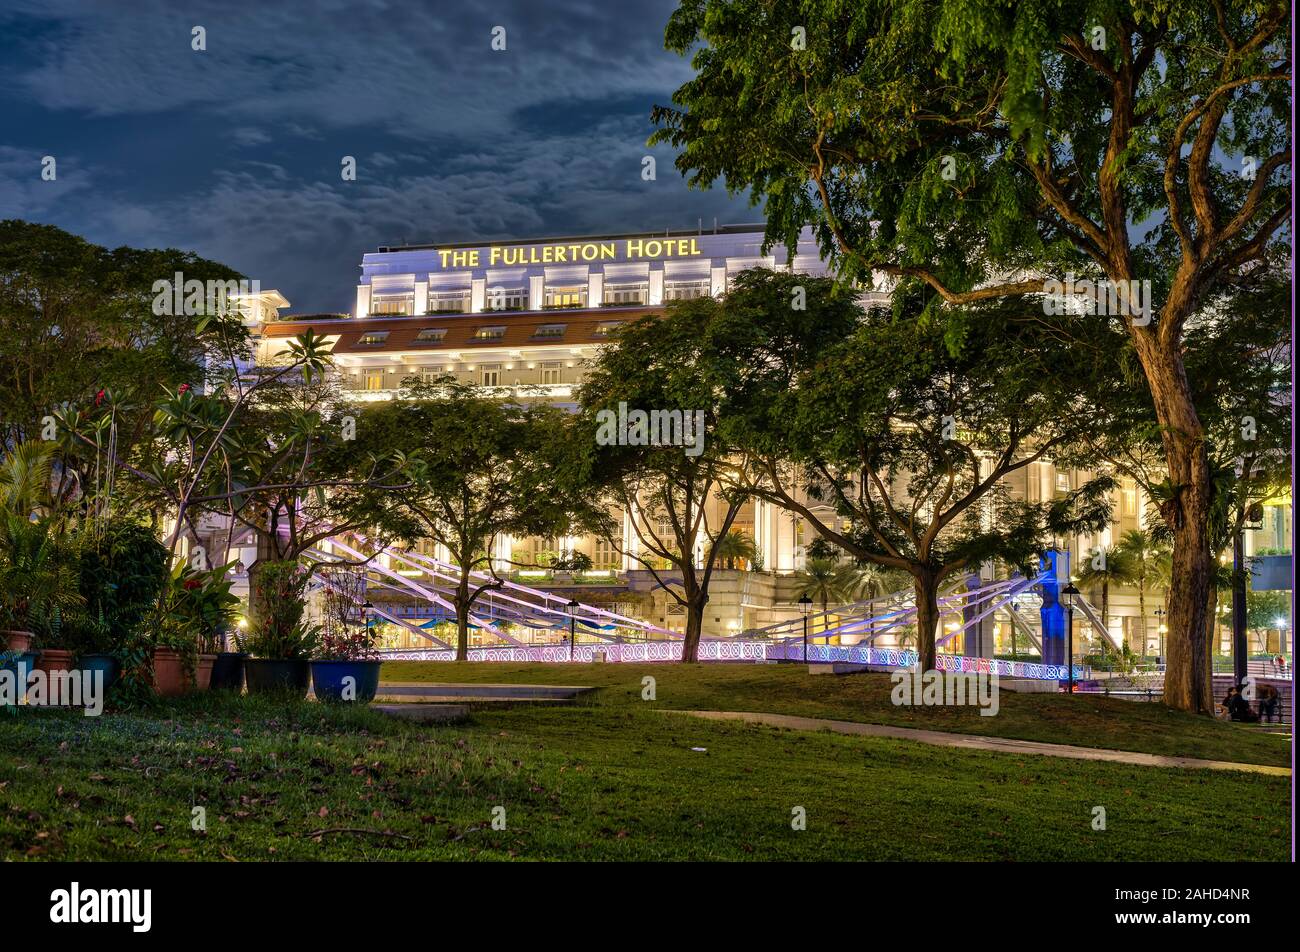 Fullerton Hotel, Marina Bay Sands, at night, Singapore, Asia Stock Photo